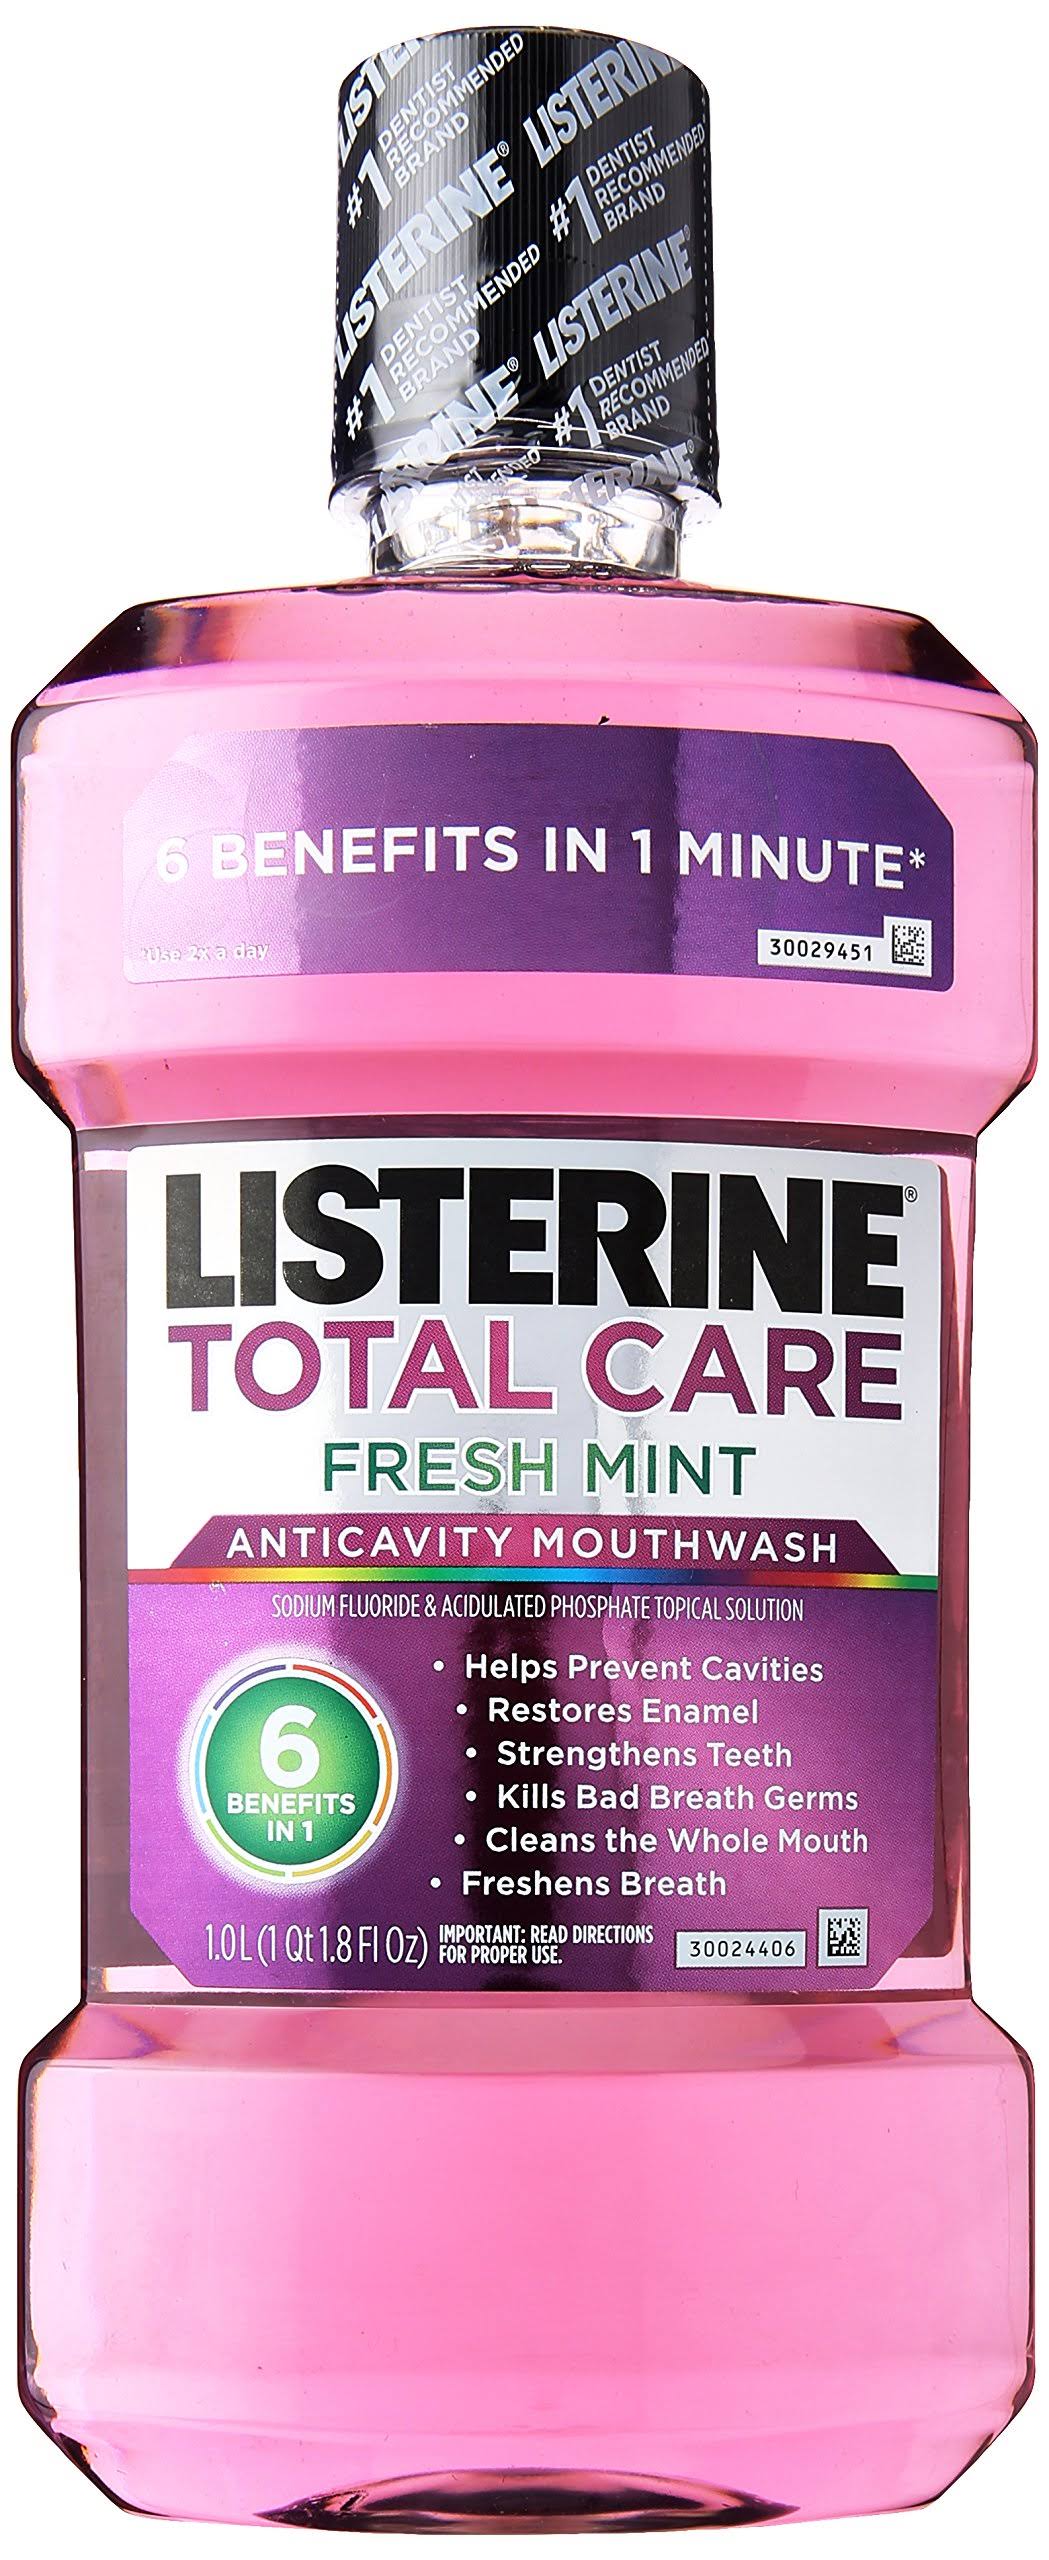 Listerine Total Care Anticavity Mouthwash - Fresh Mint, 1L